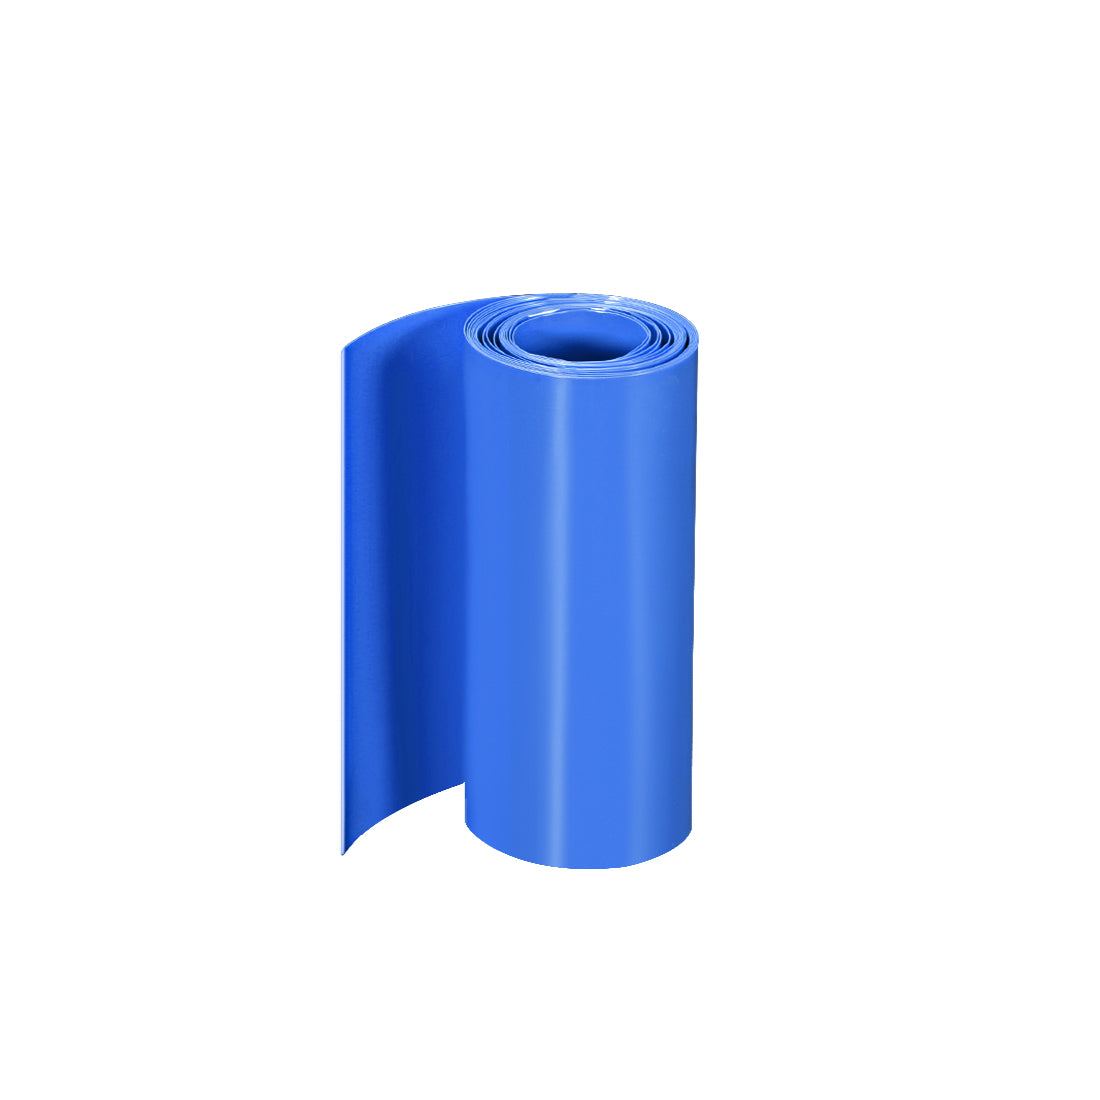 uxcell Uxcell PVC Heat Shrink Tube 91mm Flat Width Wrap